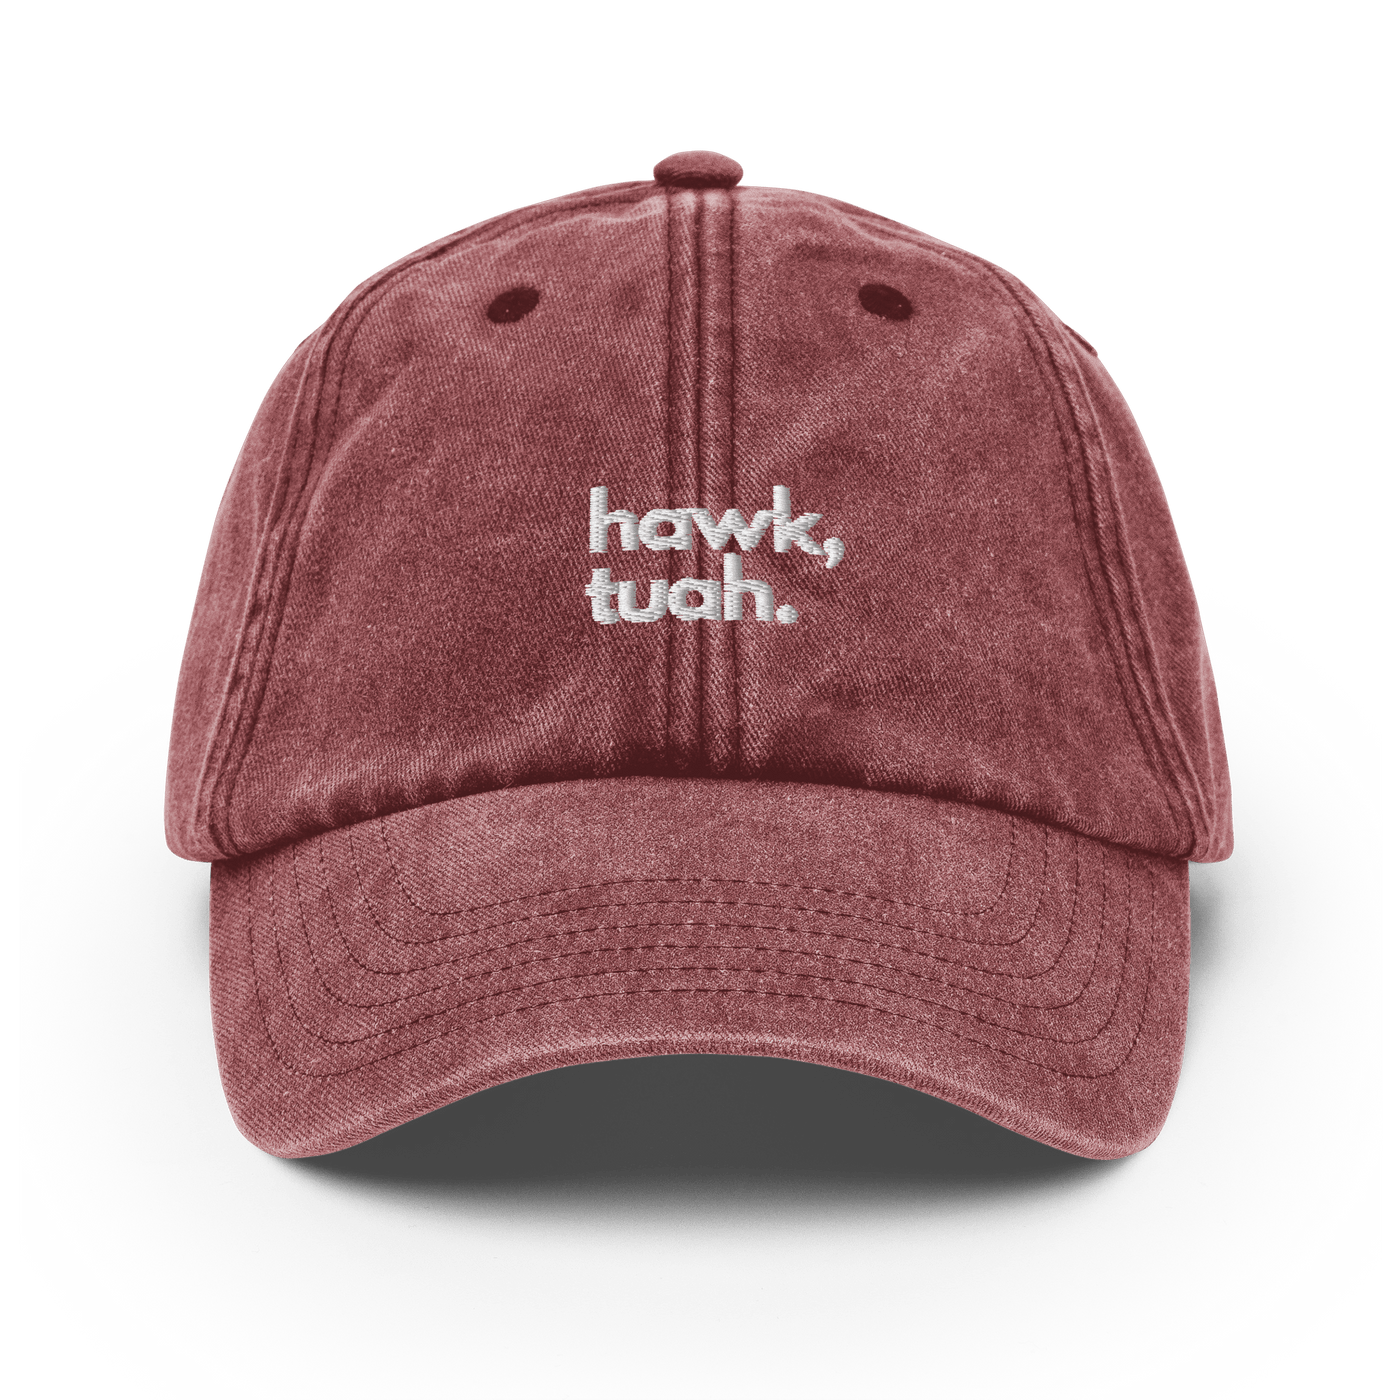 Hawk Tuah Vintage Hat - Vintage Red - Just Another Cap Store